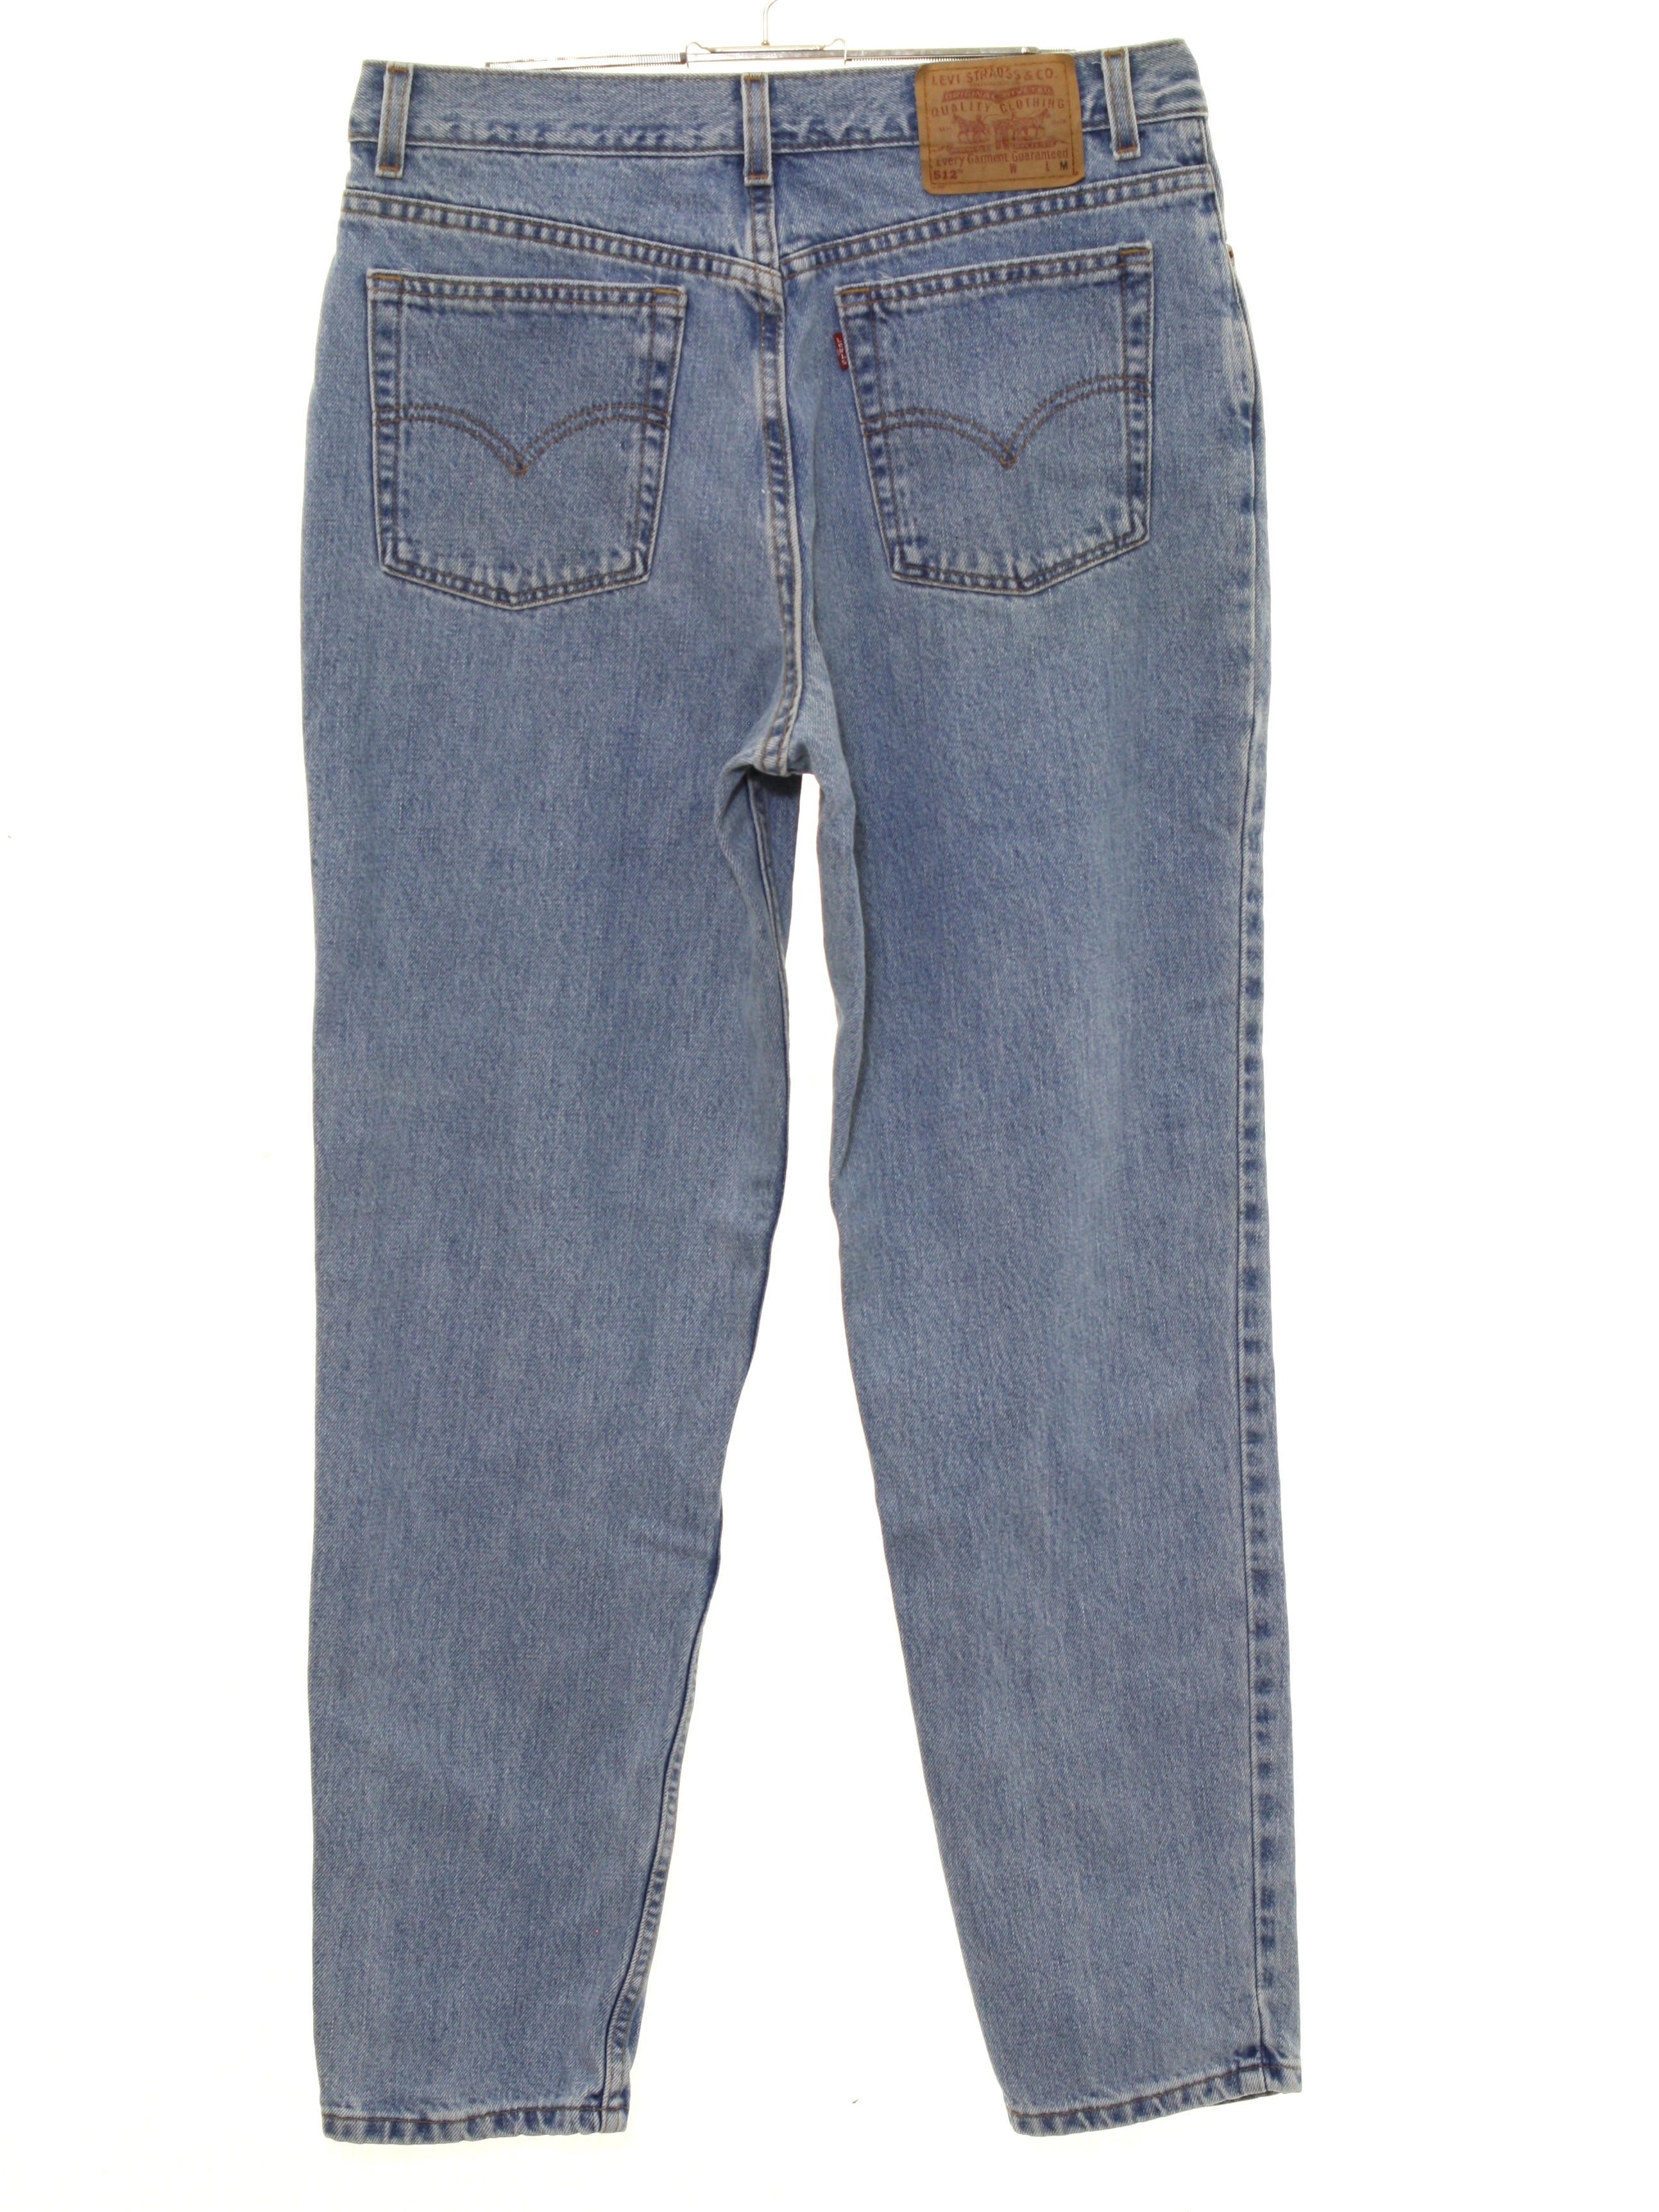 80s Vintage Levis / High Waisted Jeans / Faded LEVIS 512 Denim